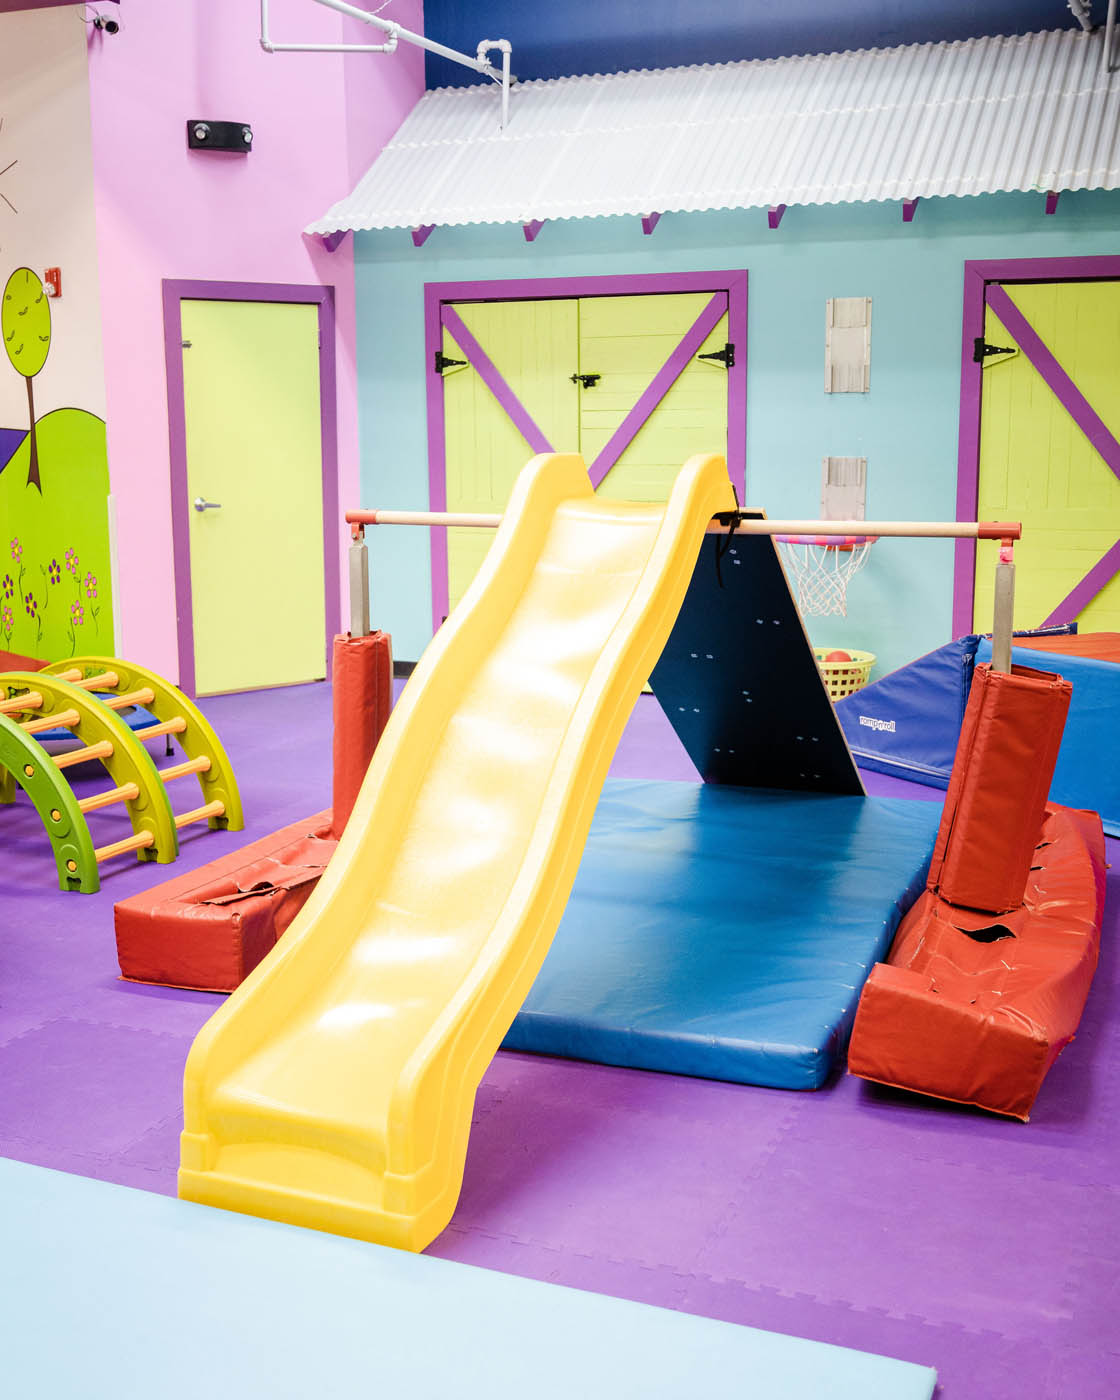 A Romp n' Roll Katy slide, indoor playgrounds in Katy, TX.